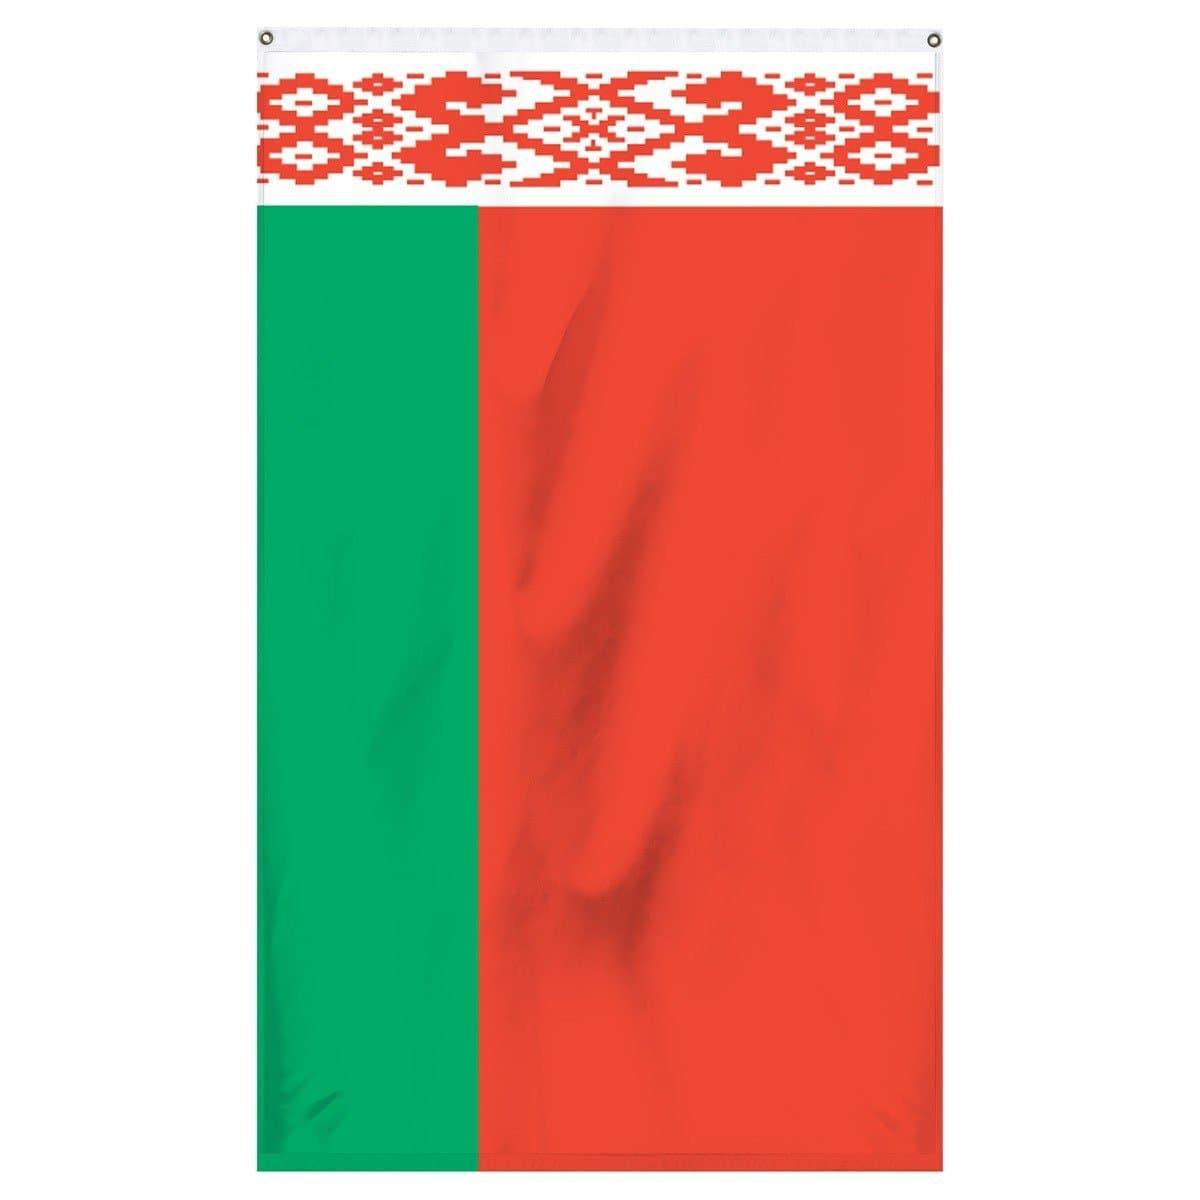 The national flag of Belarus for sale